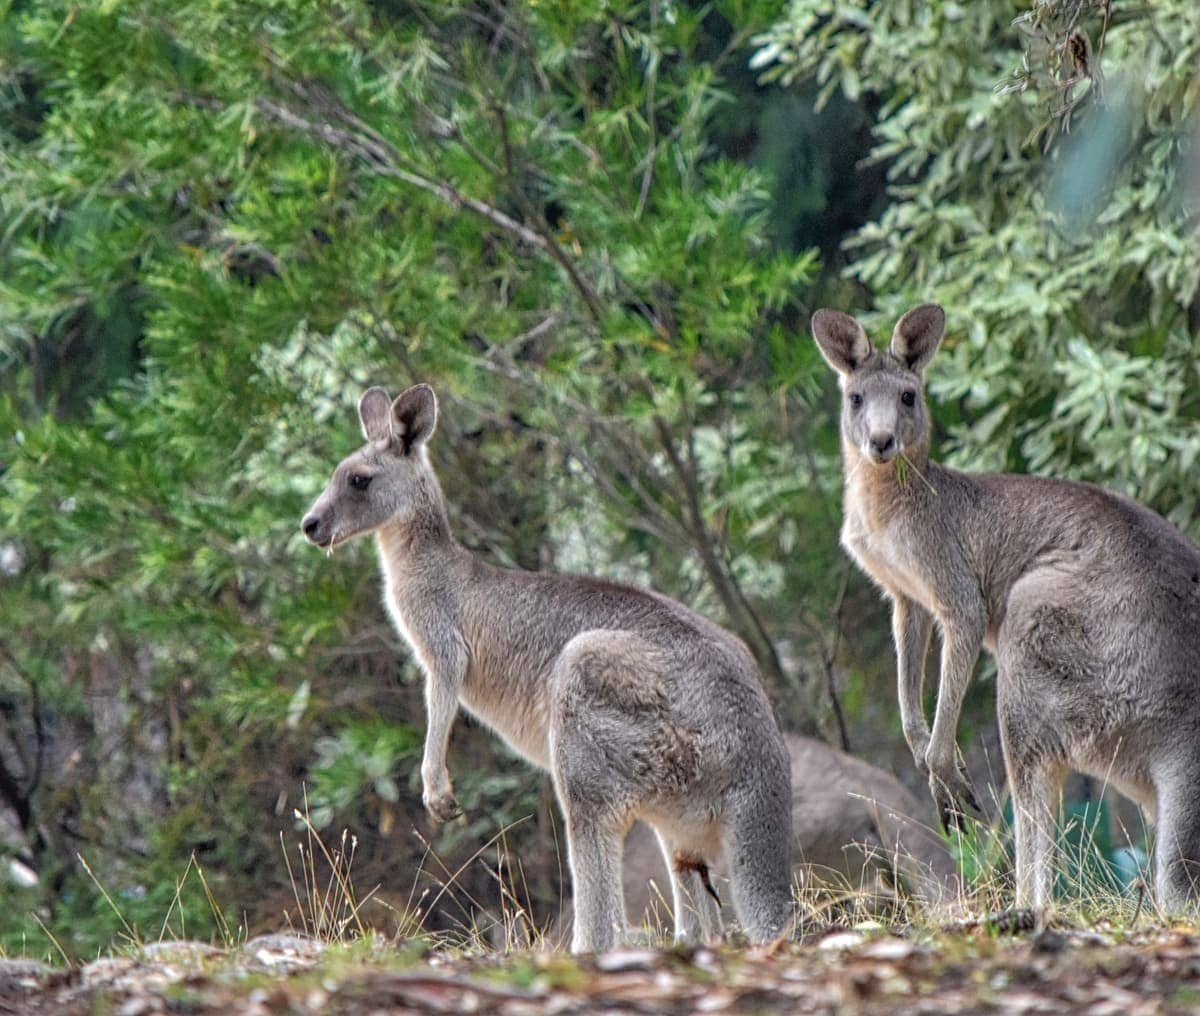 Kangaroo and Raymond island in Australia